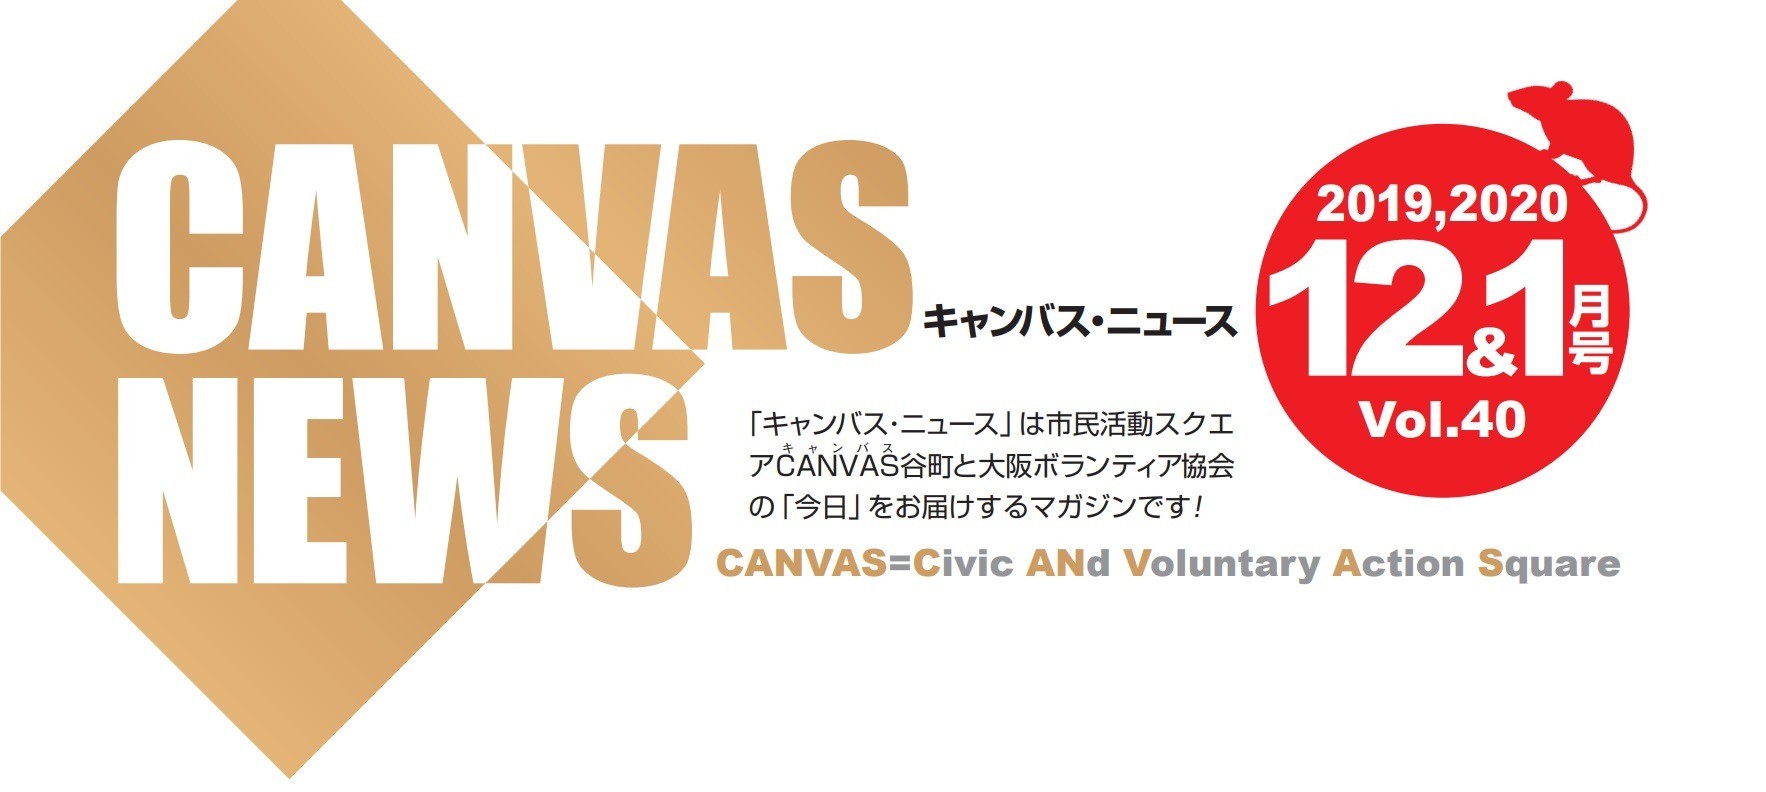 【CANVAS NEWS】2019年12・2020年1月号